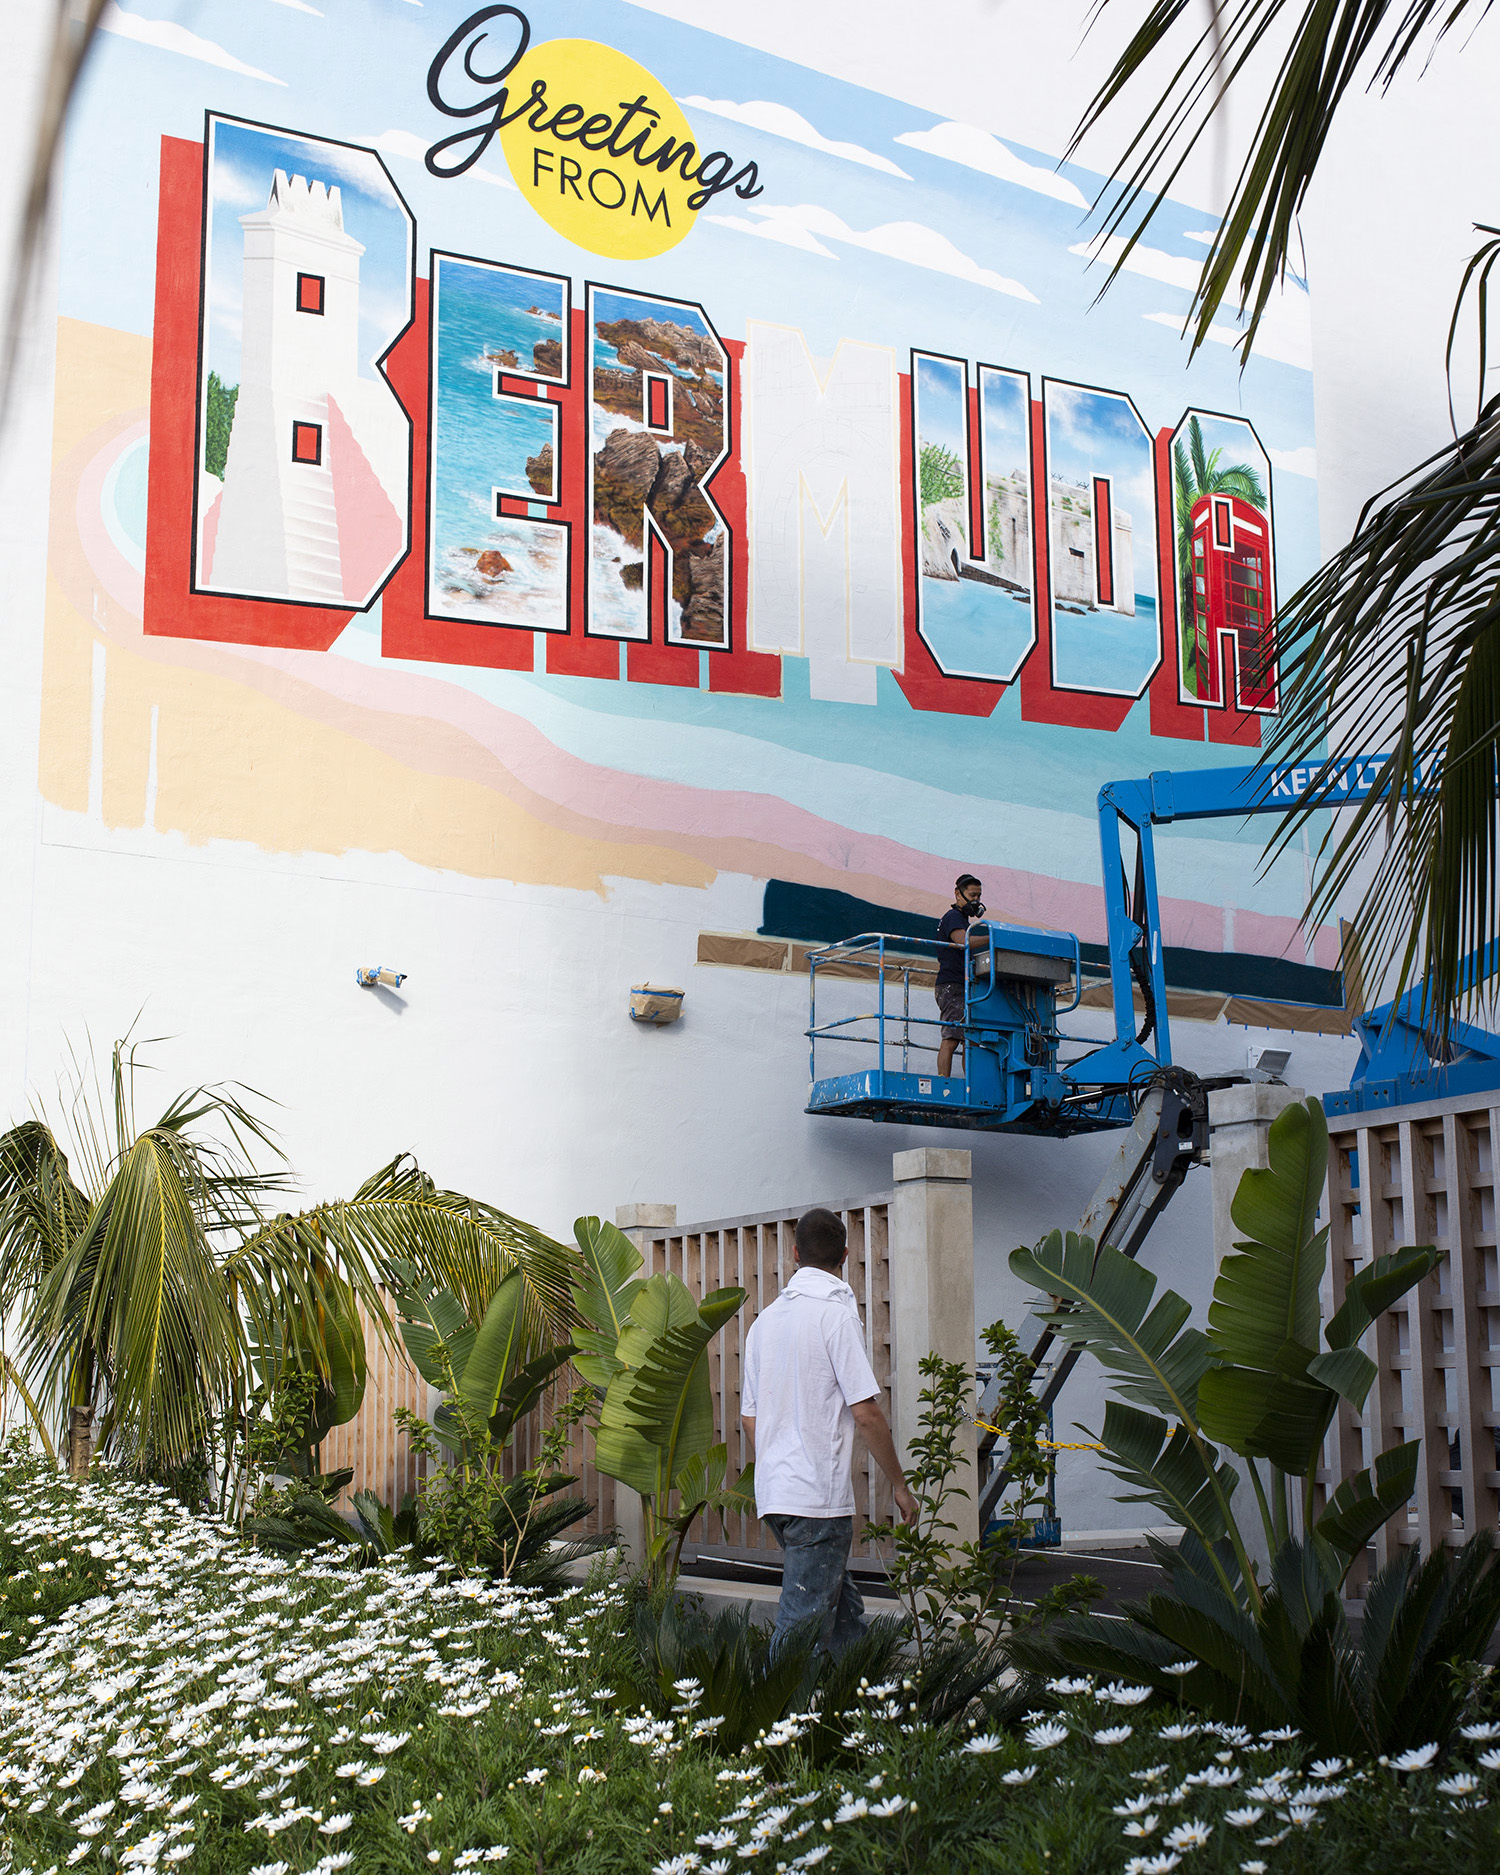 Greetings from Bermuda Mural Welcome Sign - WIP